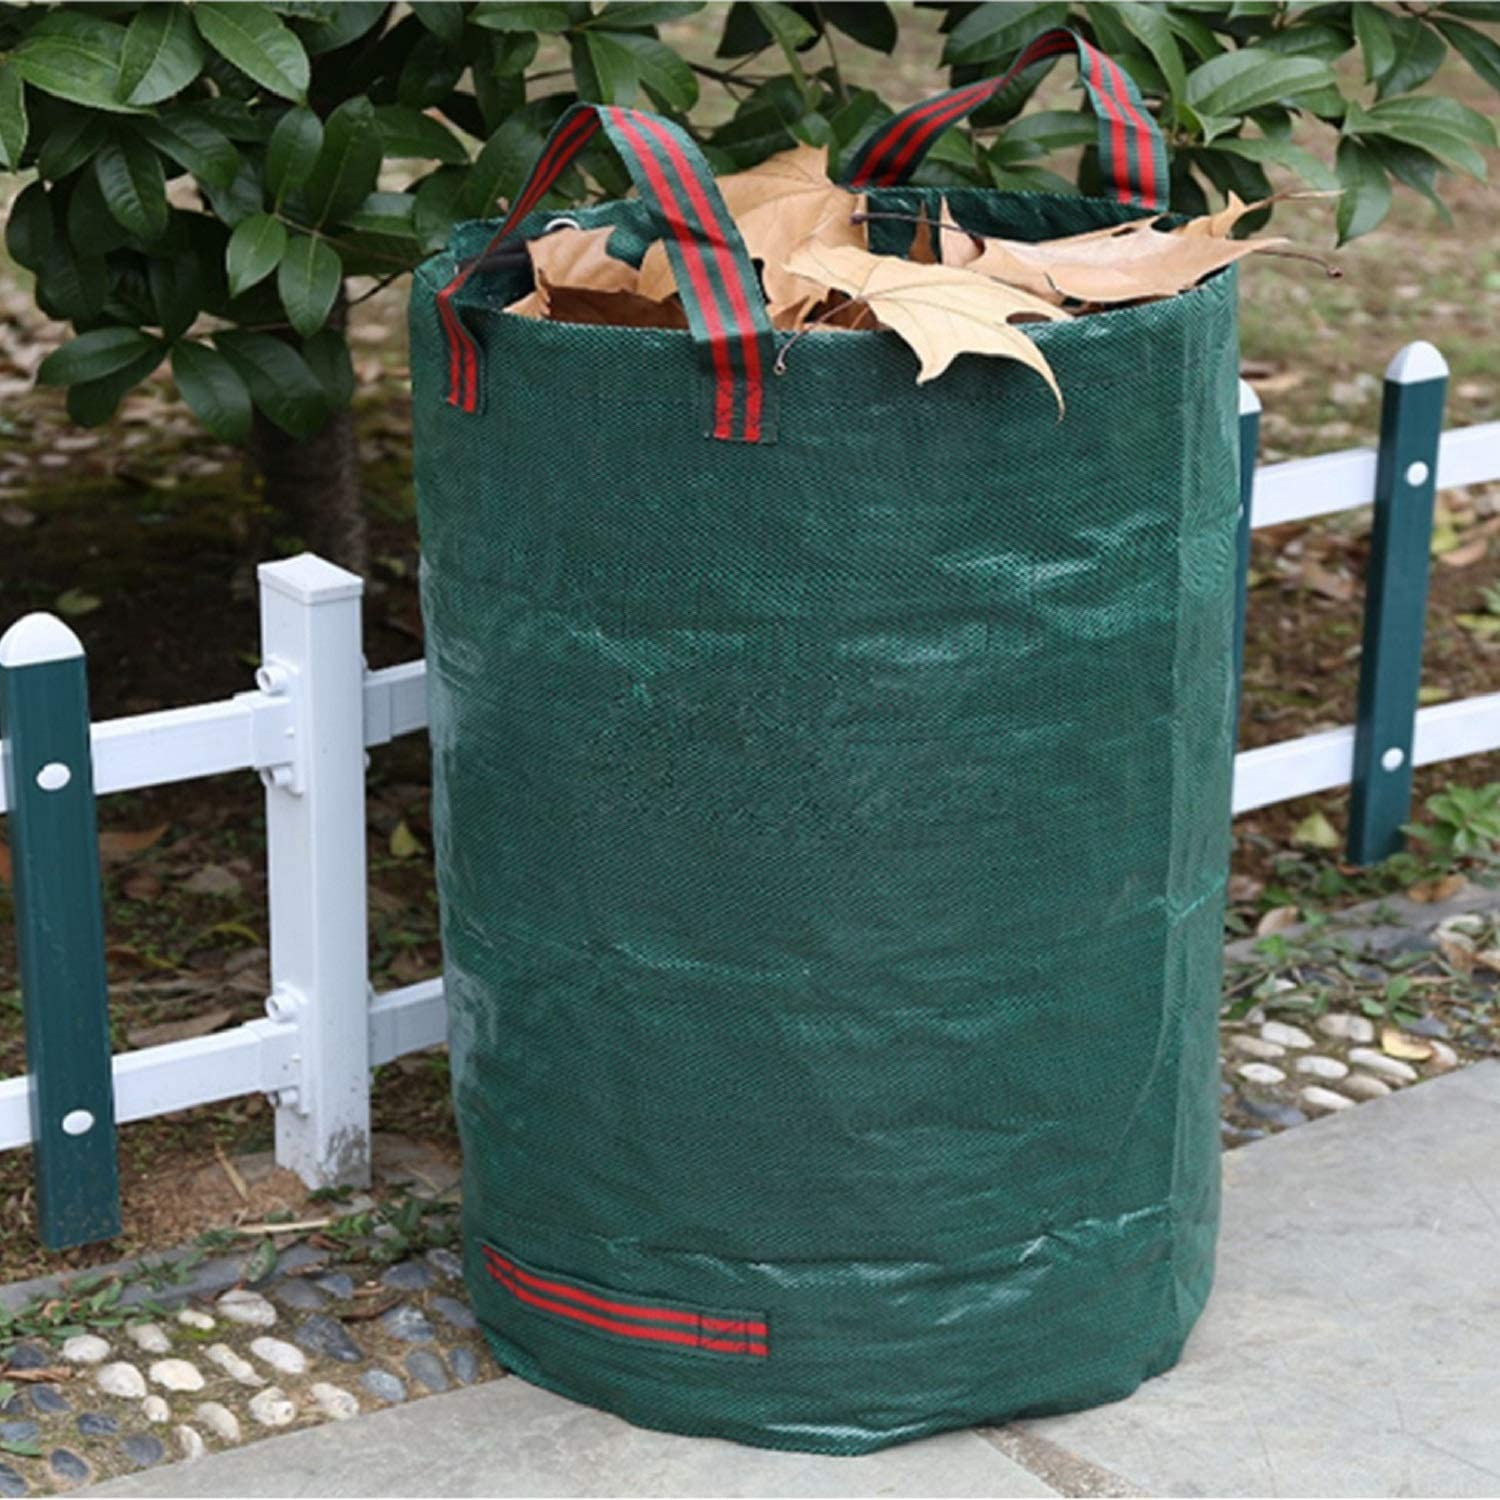 100L Waterproof Reusable Collapsible Pop up Garden Waste Leaf Bag